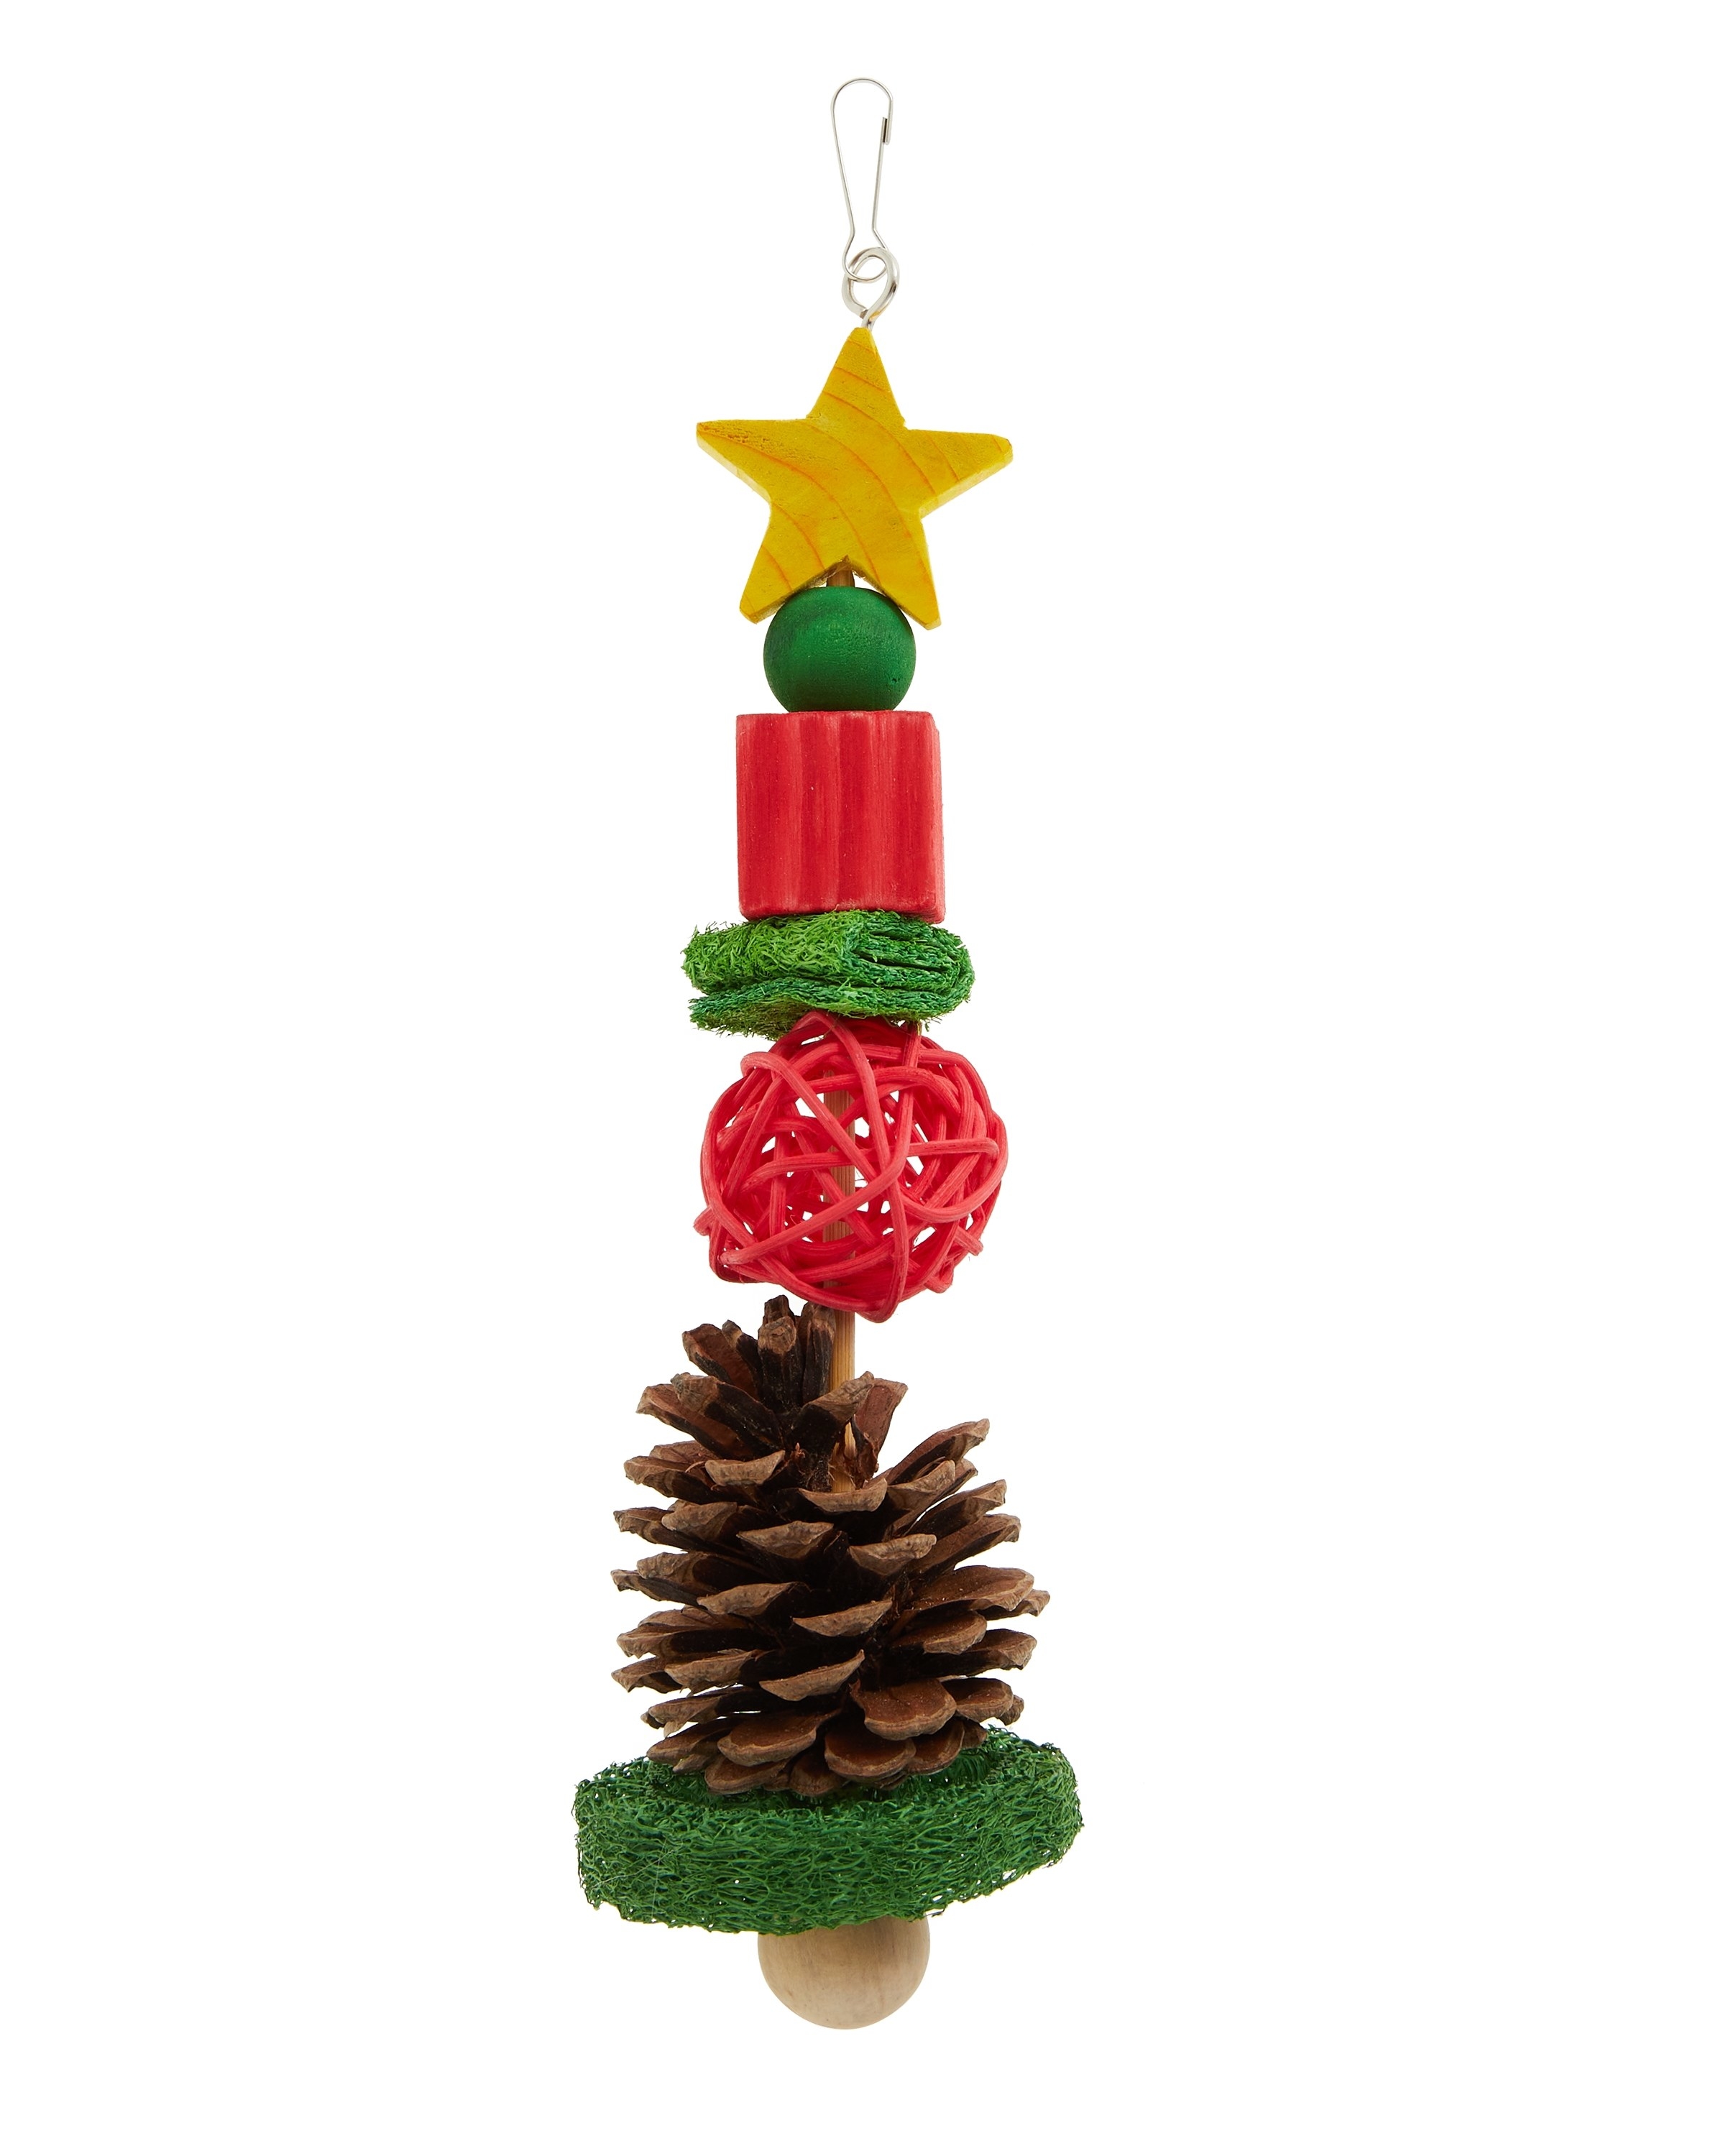 Christmas tree kebab toy for small pet